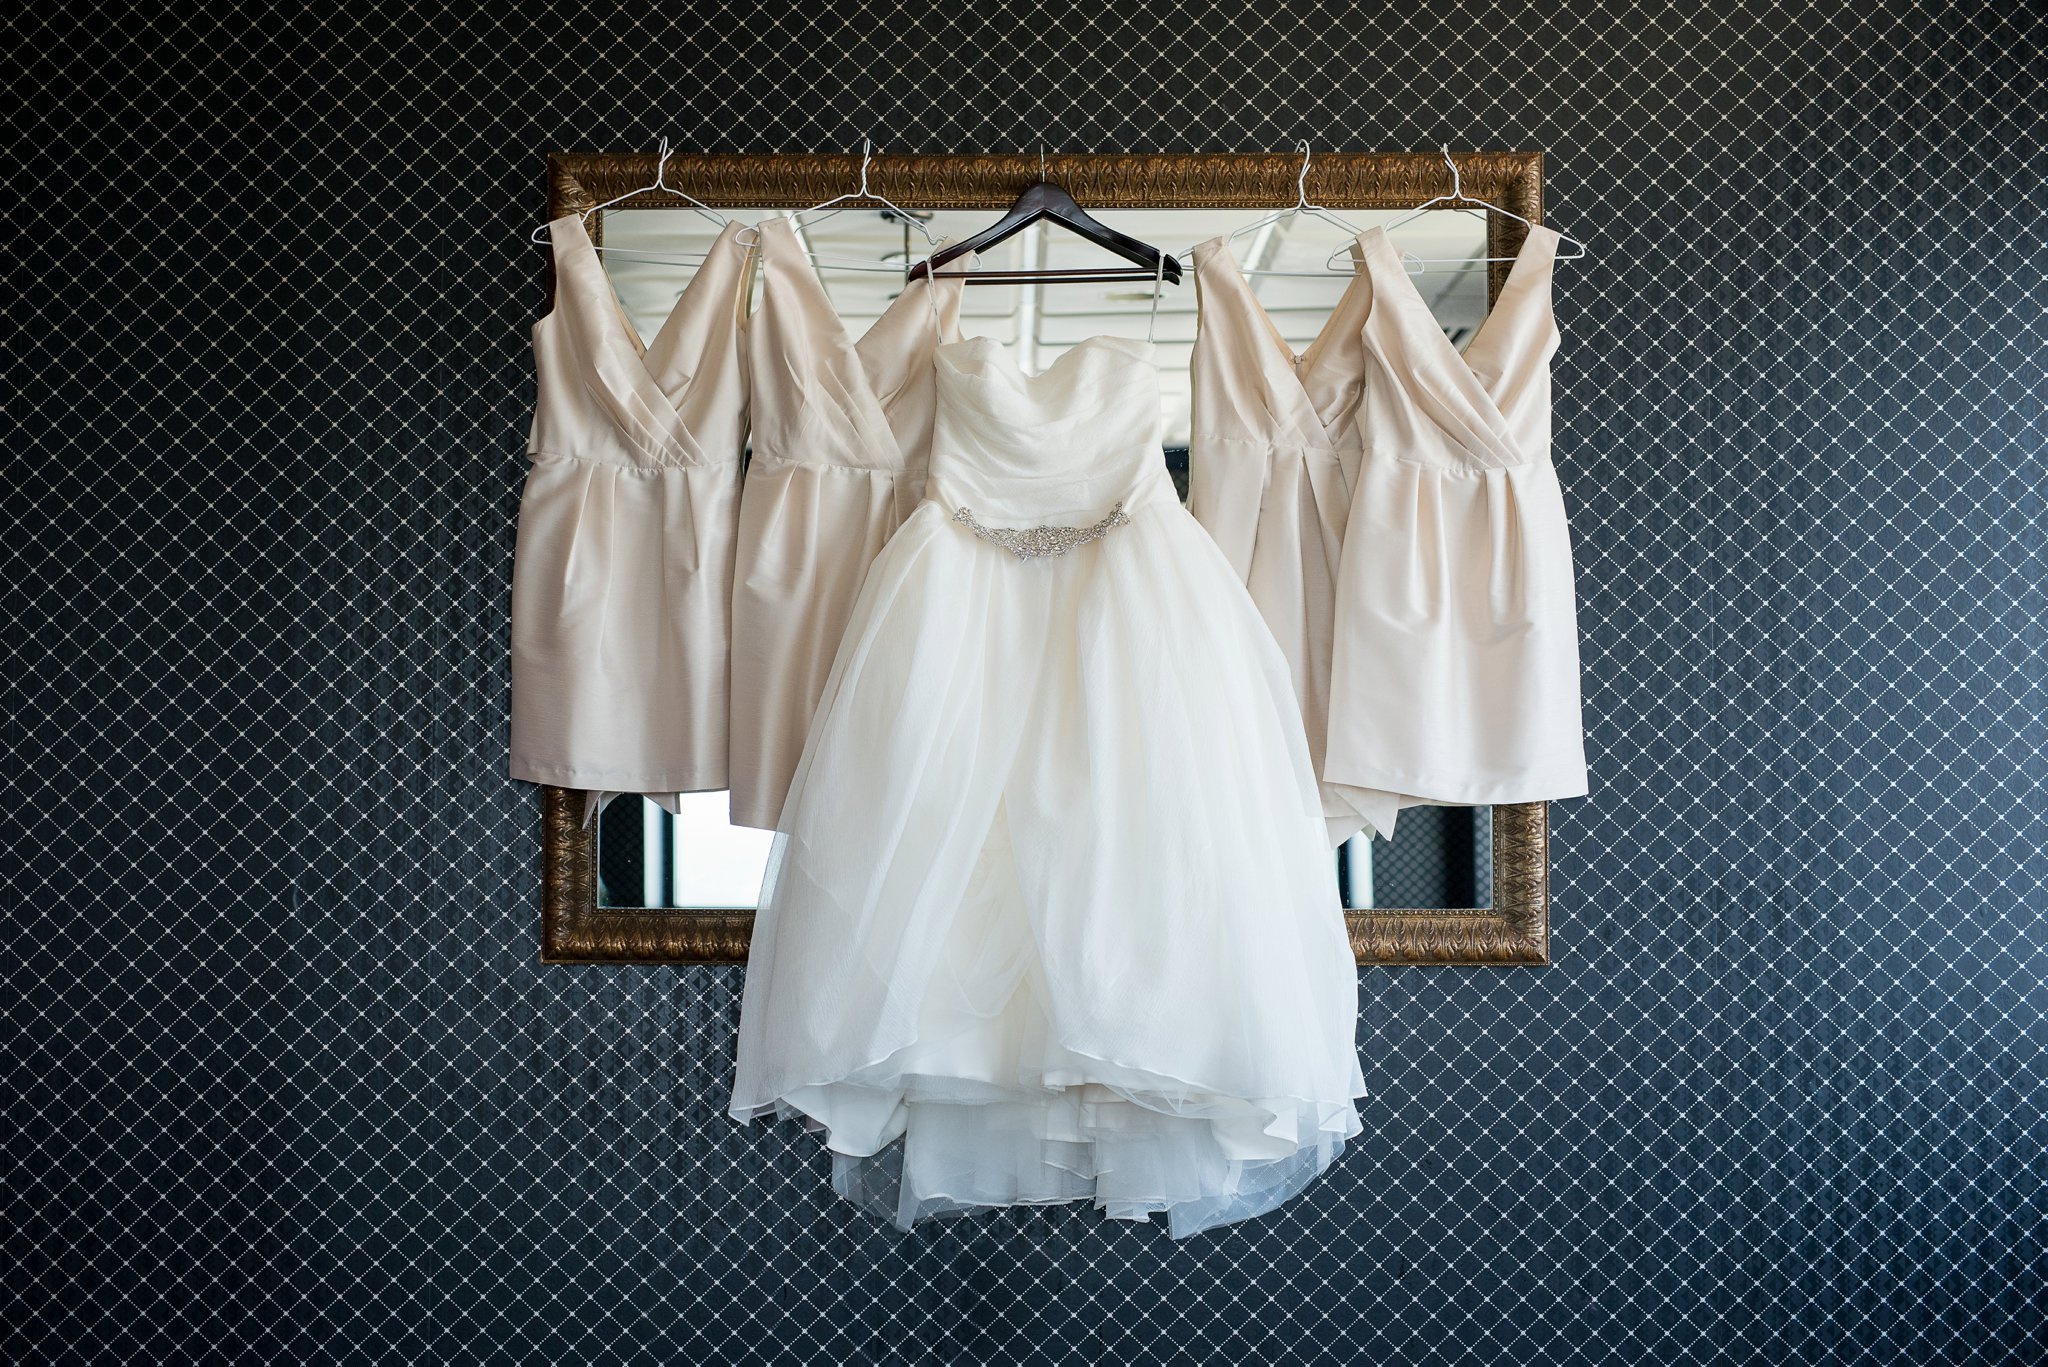 Skyline Club Wedding | gold wedding invitation | white roses |Vera Wang gown